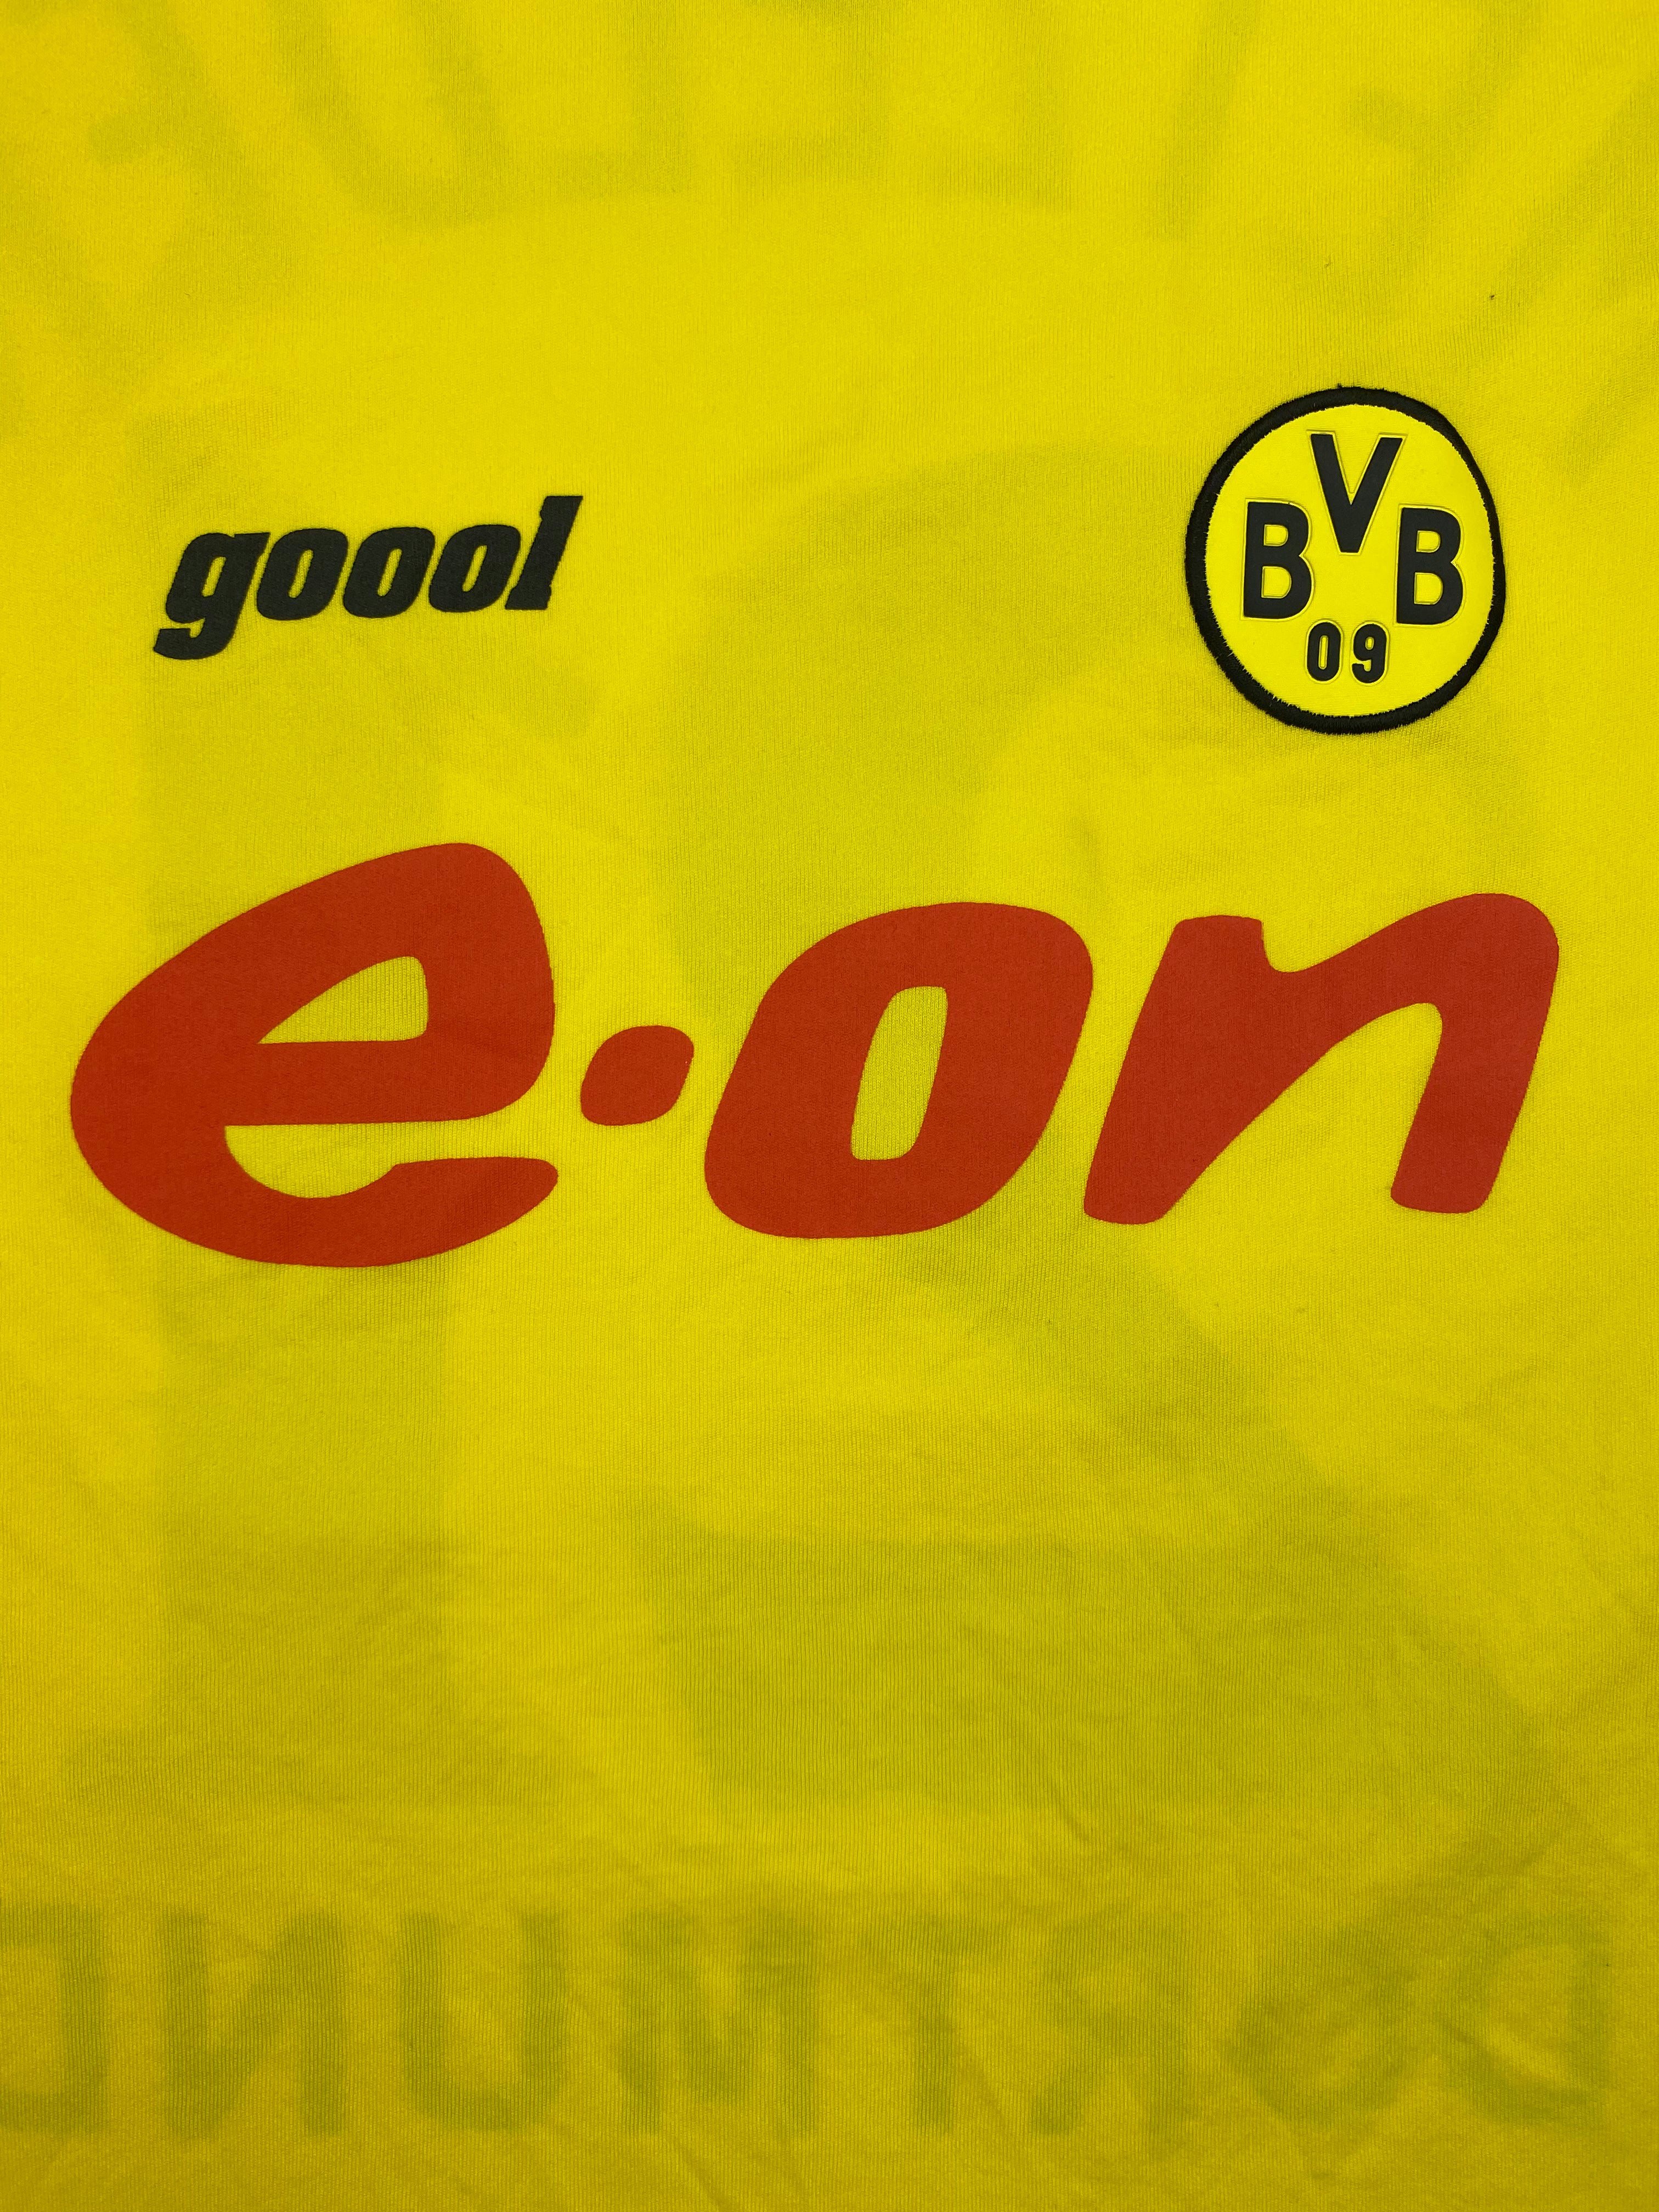 2003/04 Camiseta local del Borussia Dortmund Metzelder n.º 21 (XL) 9/10 